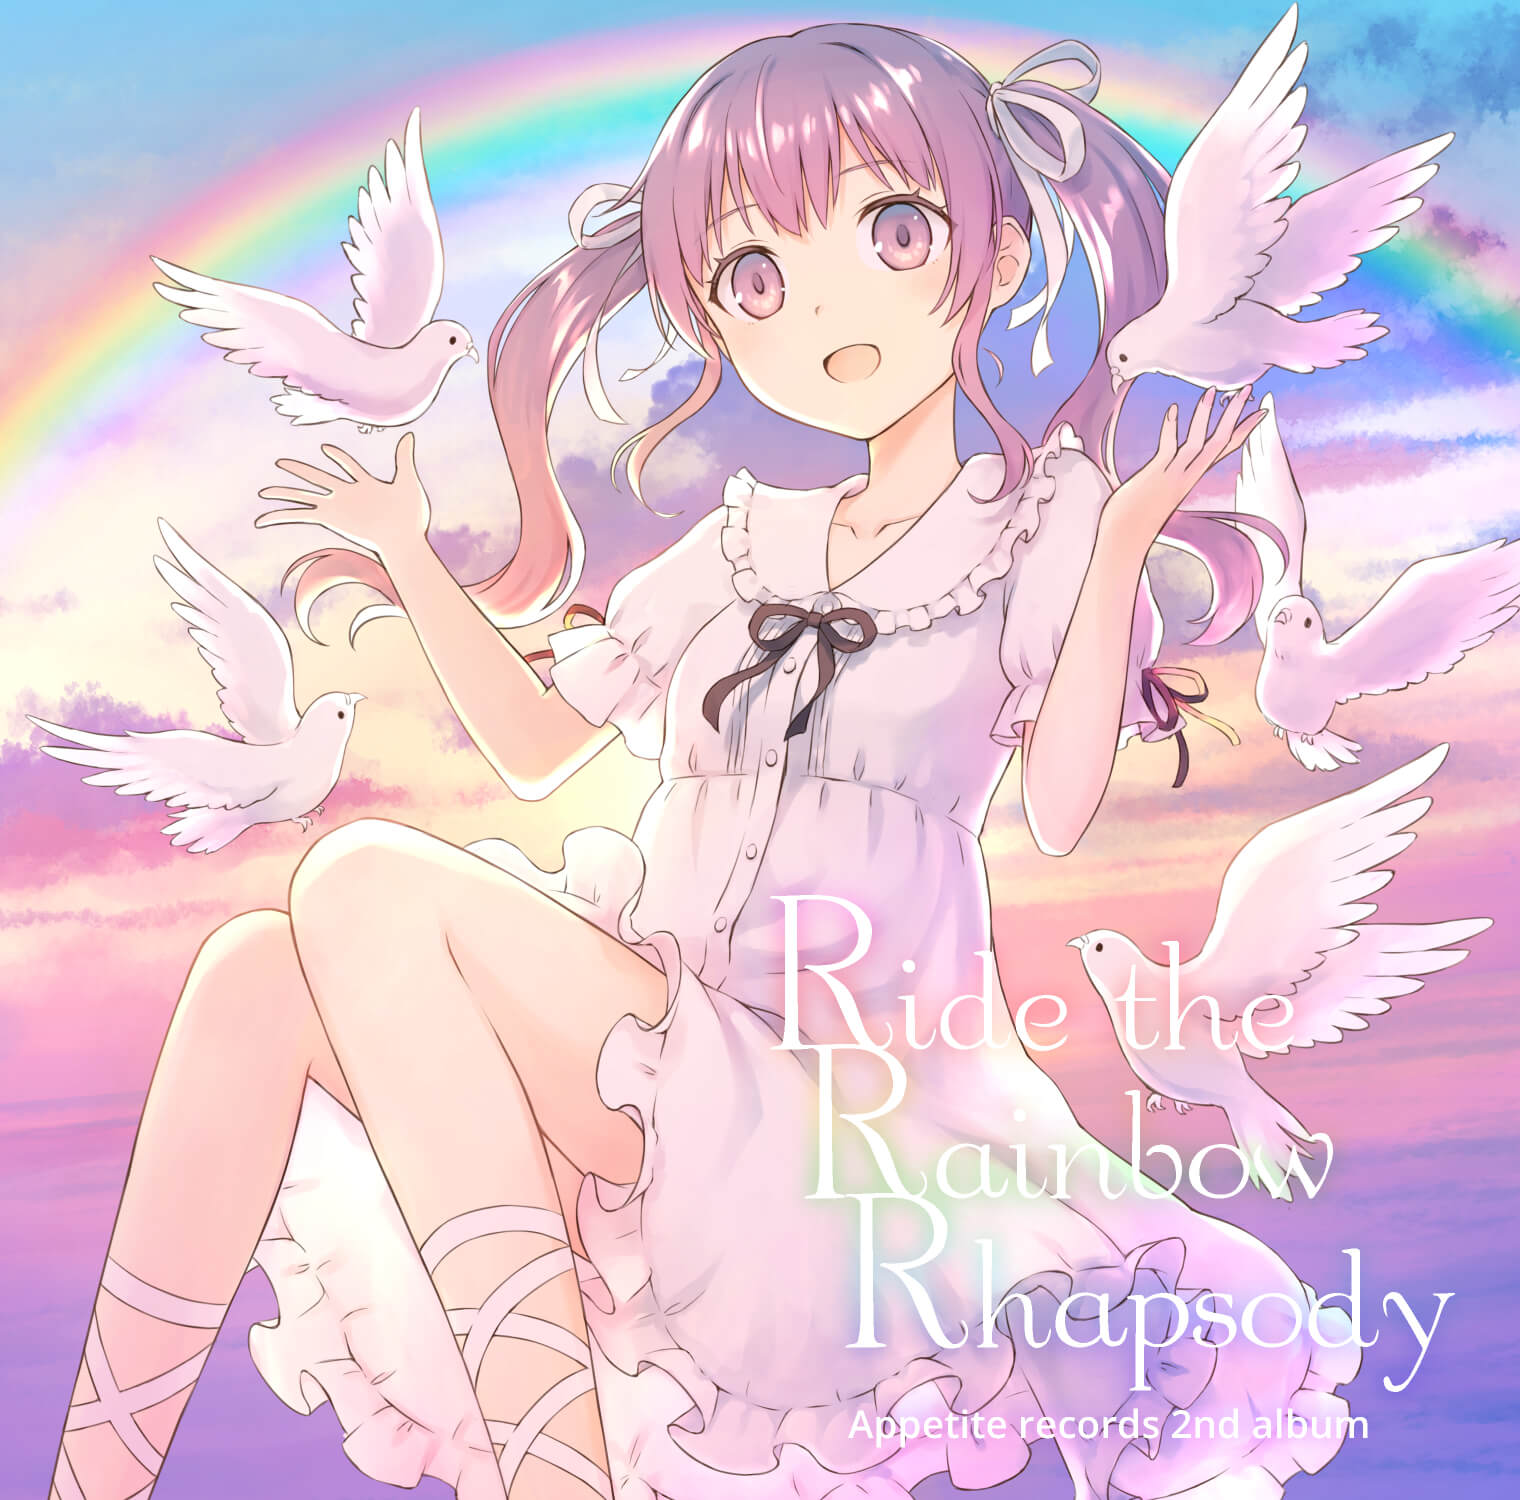 「Ride the Rainbow Rhapsody」マスタリング